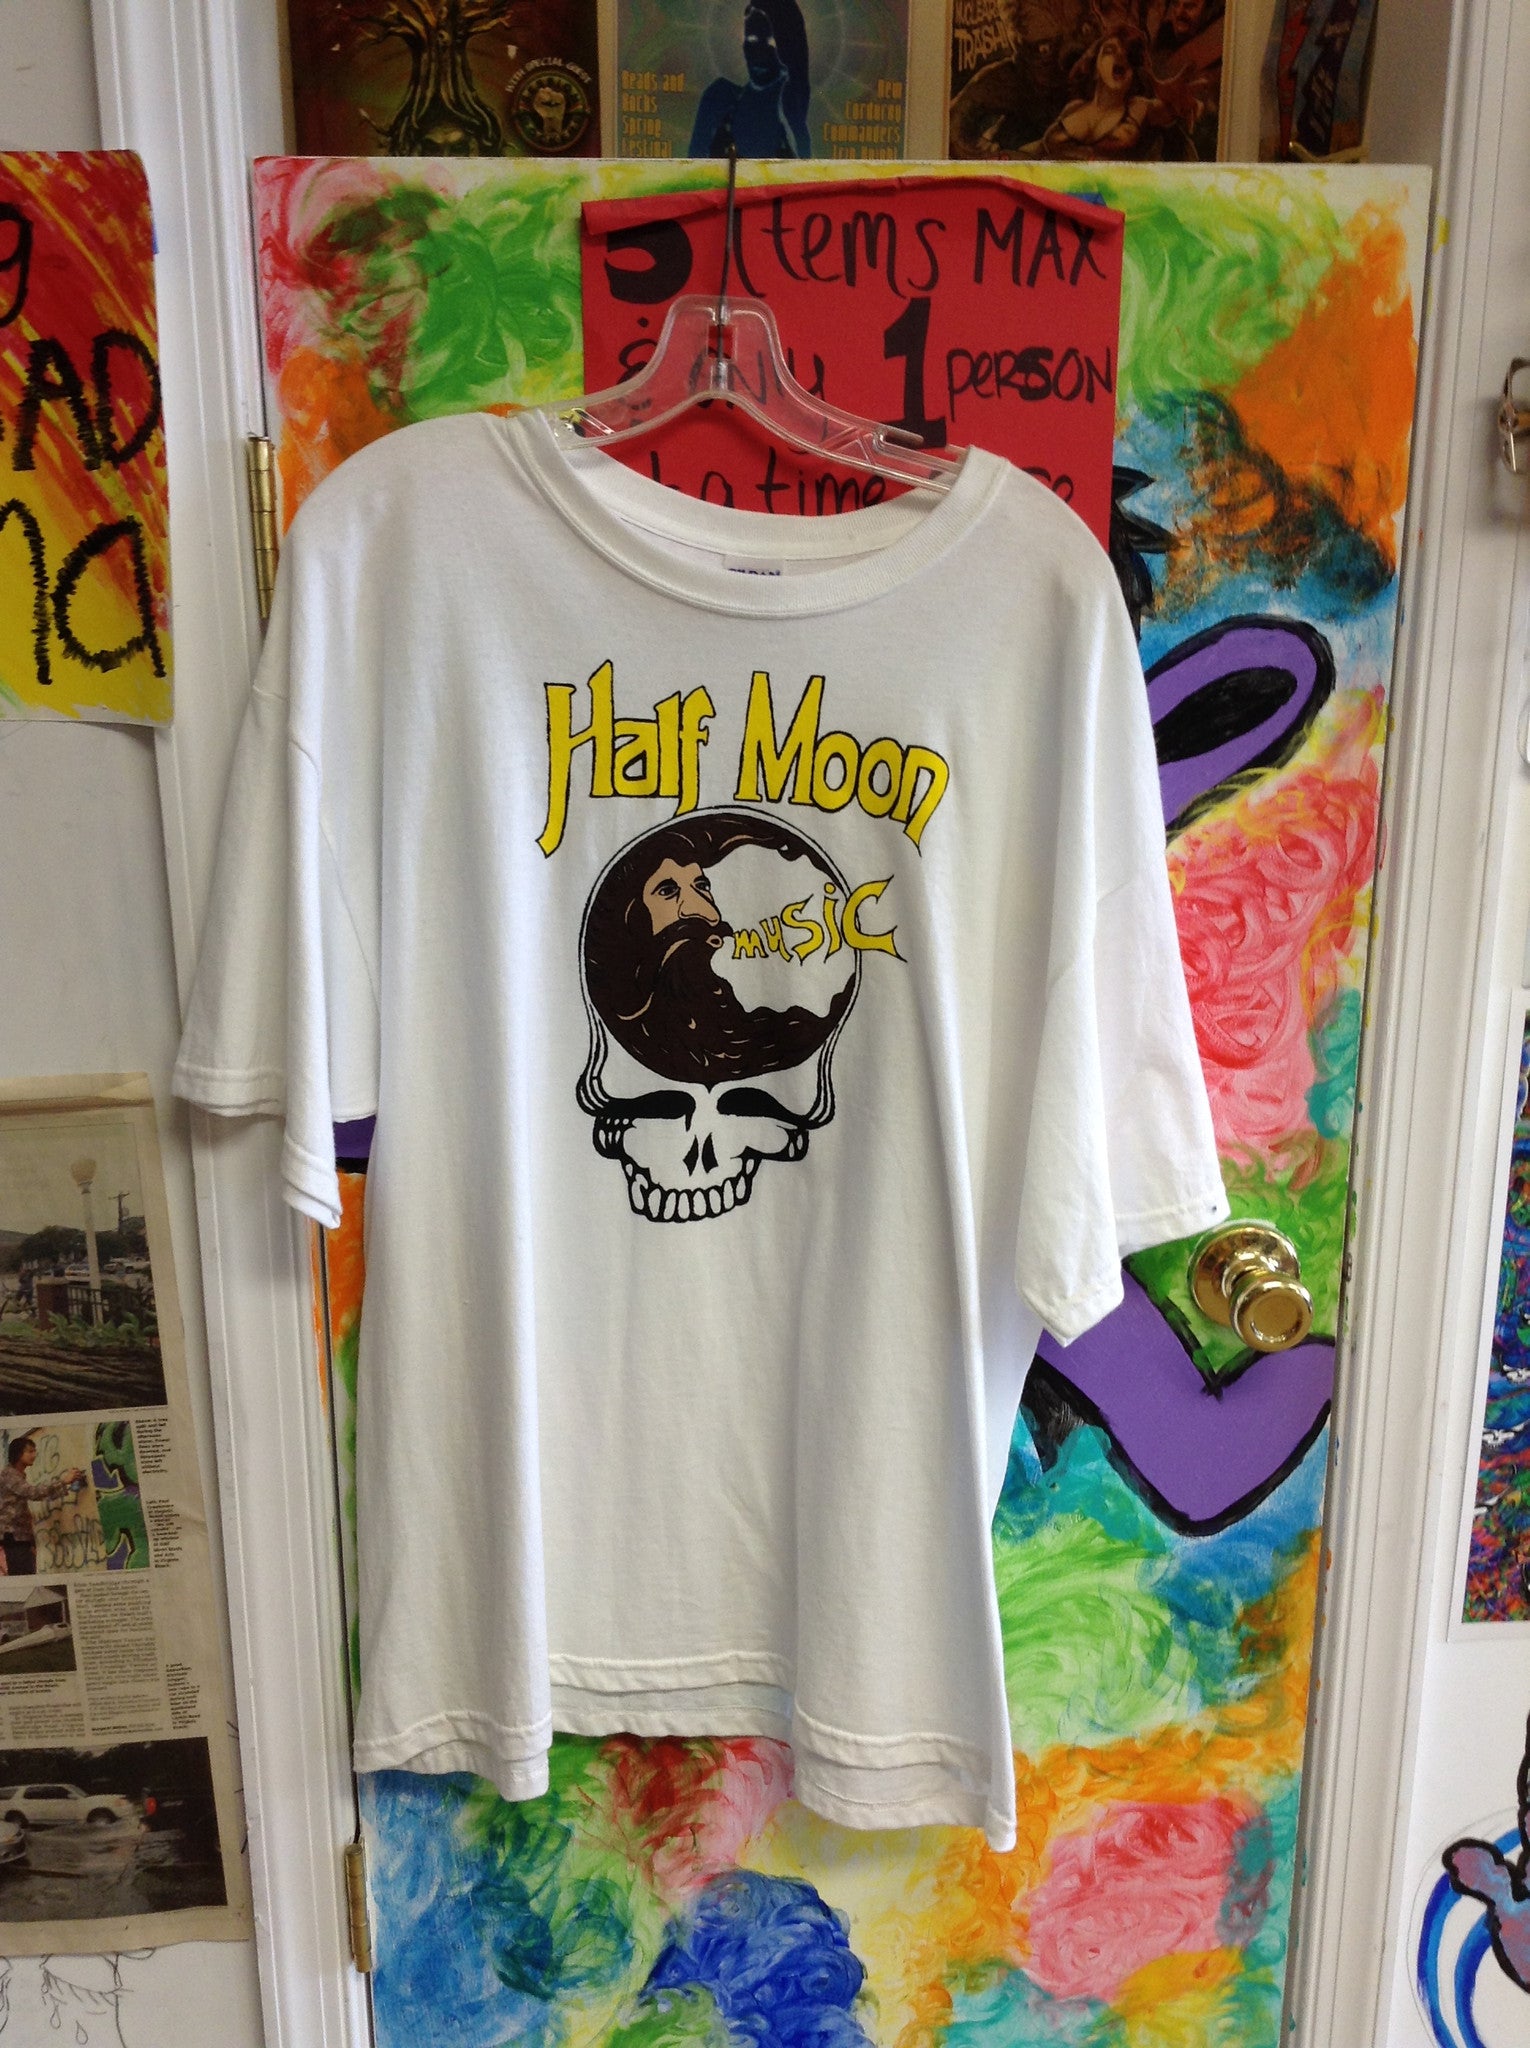 Steal Your Half Moon T-shirt - HalfMoonMusic